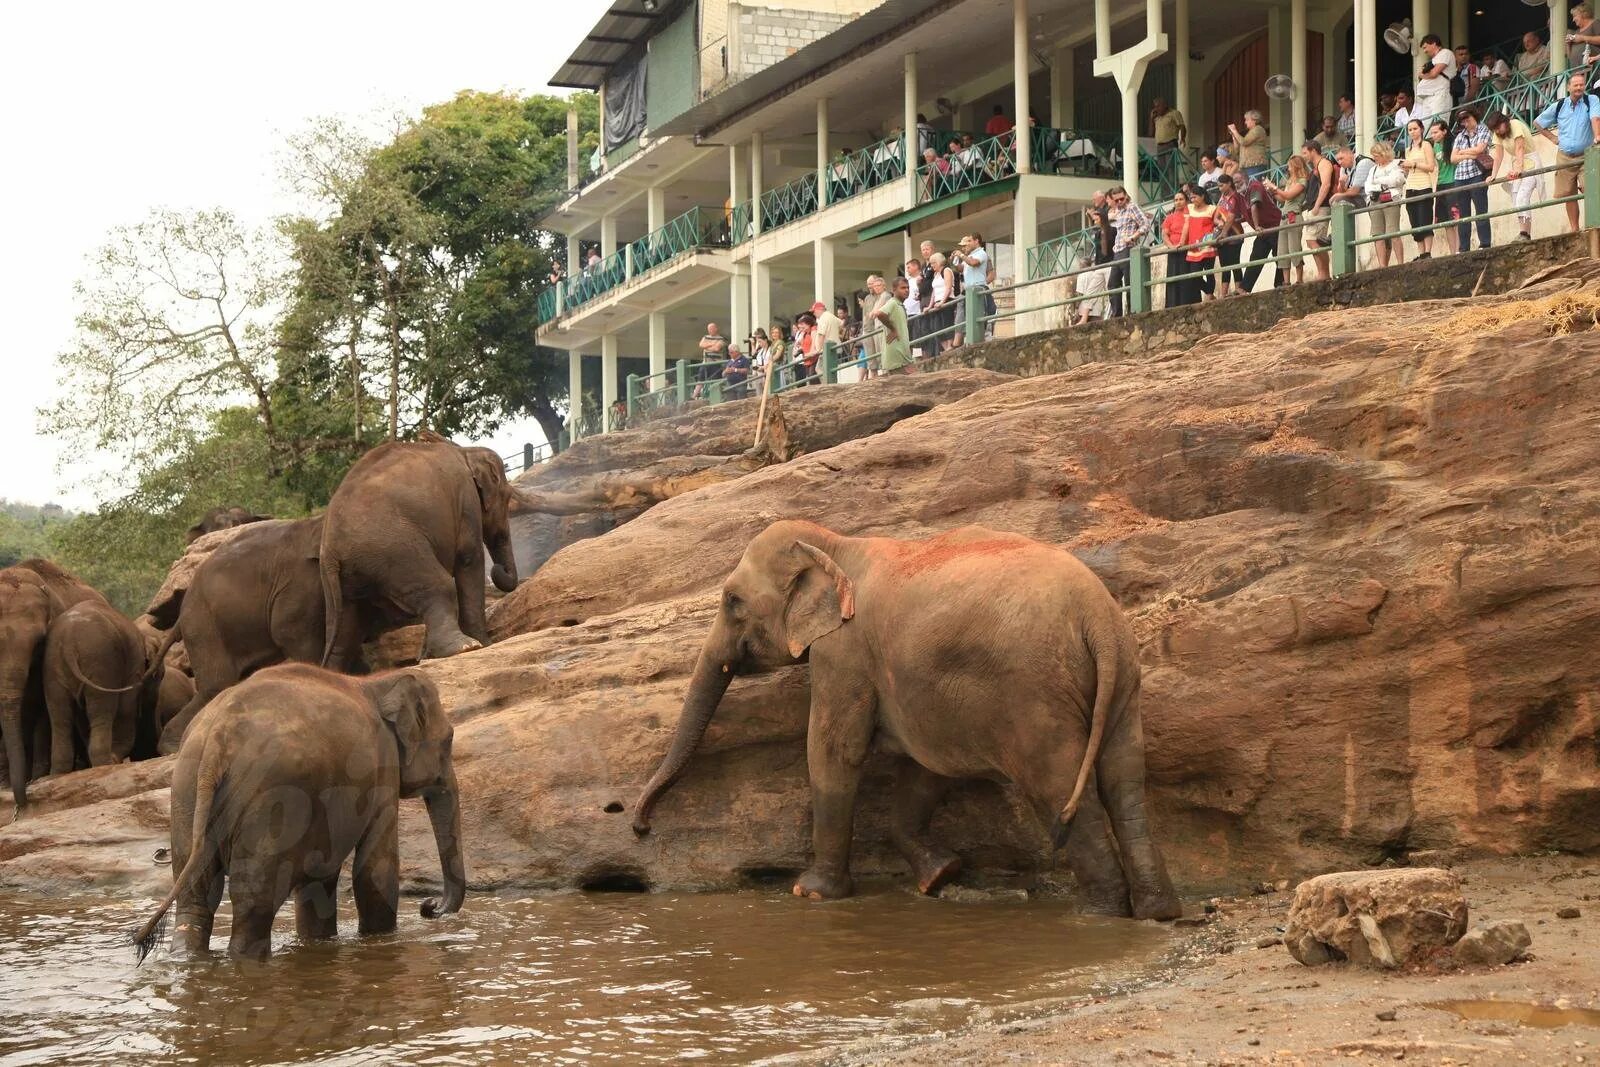 Слоновий питомник Шри Ланка Пиннавела. Шри Ланка приют Пиннавела. Приют для слонов Пиннавела Шри-Ланка. Шри Ланка питомник слонов. Ферма шри ланка